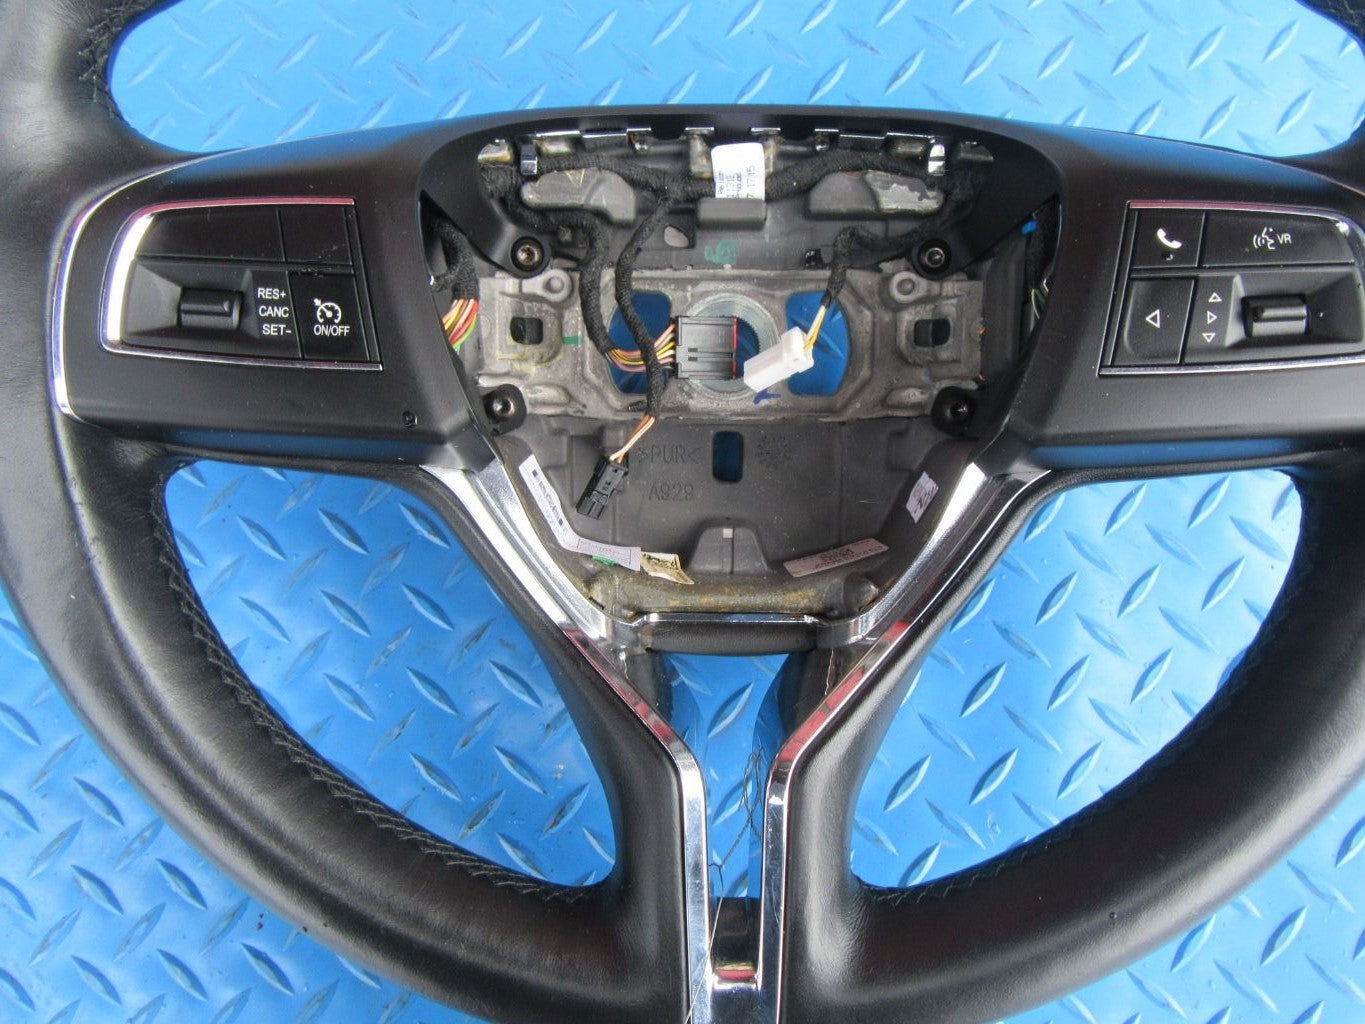 Maserati Quattroporte steering wheel with wood trim #8945